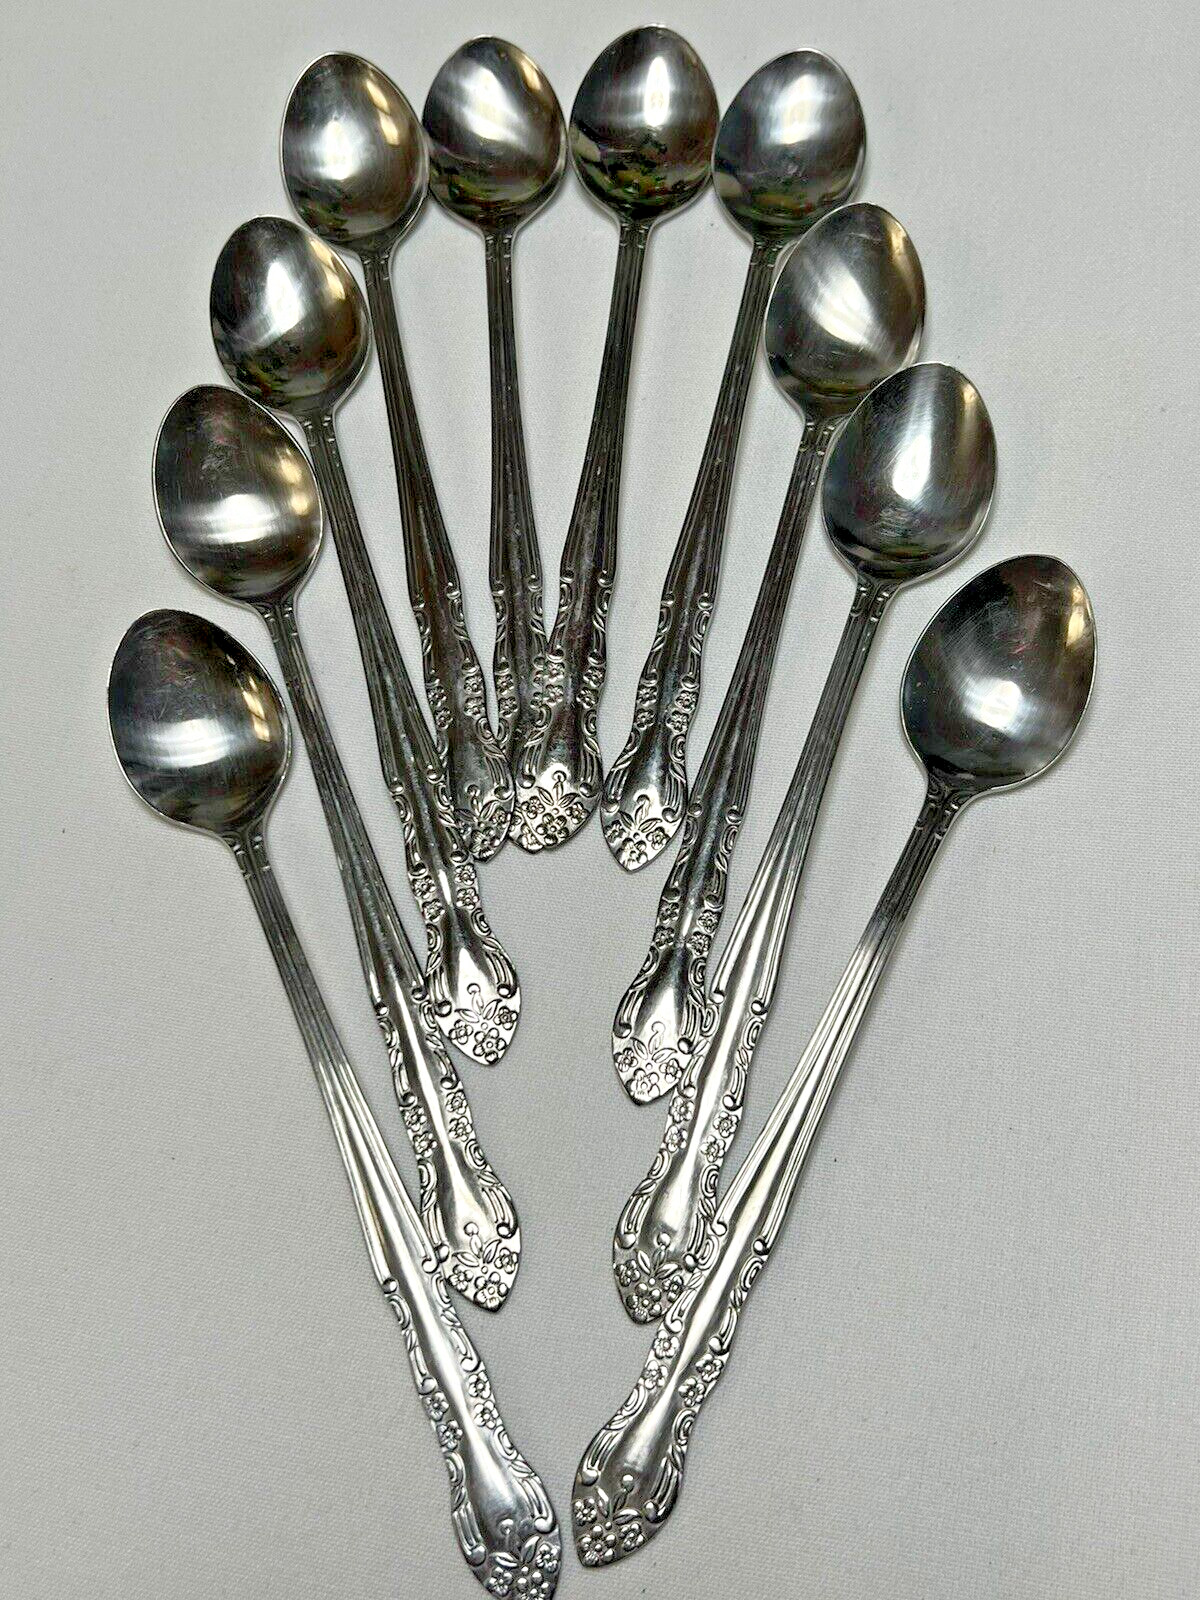 Vintage Imperial Stainless Steel Fleurette Ice Tea Spoons Set of 10